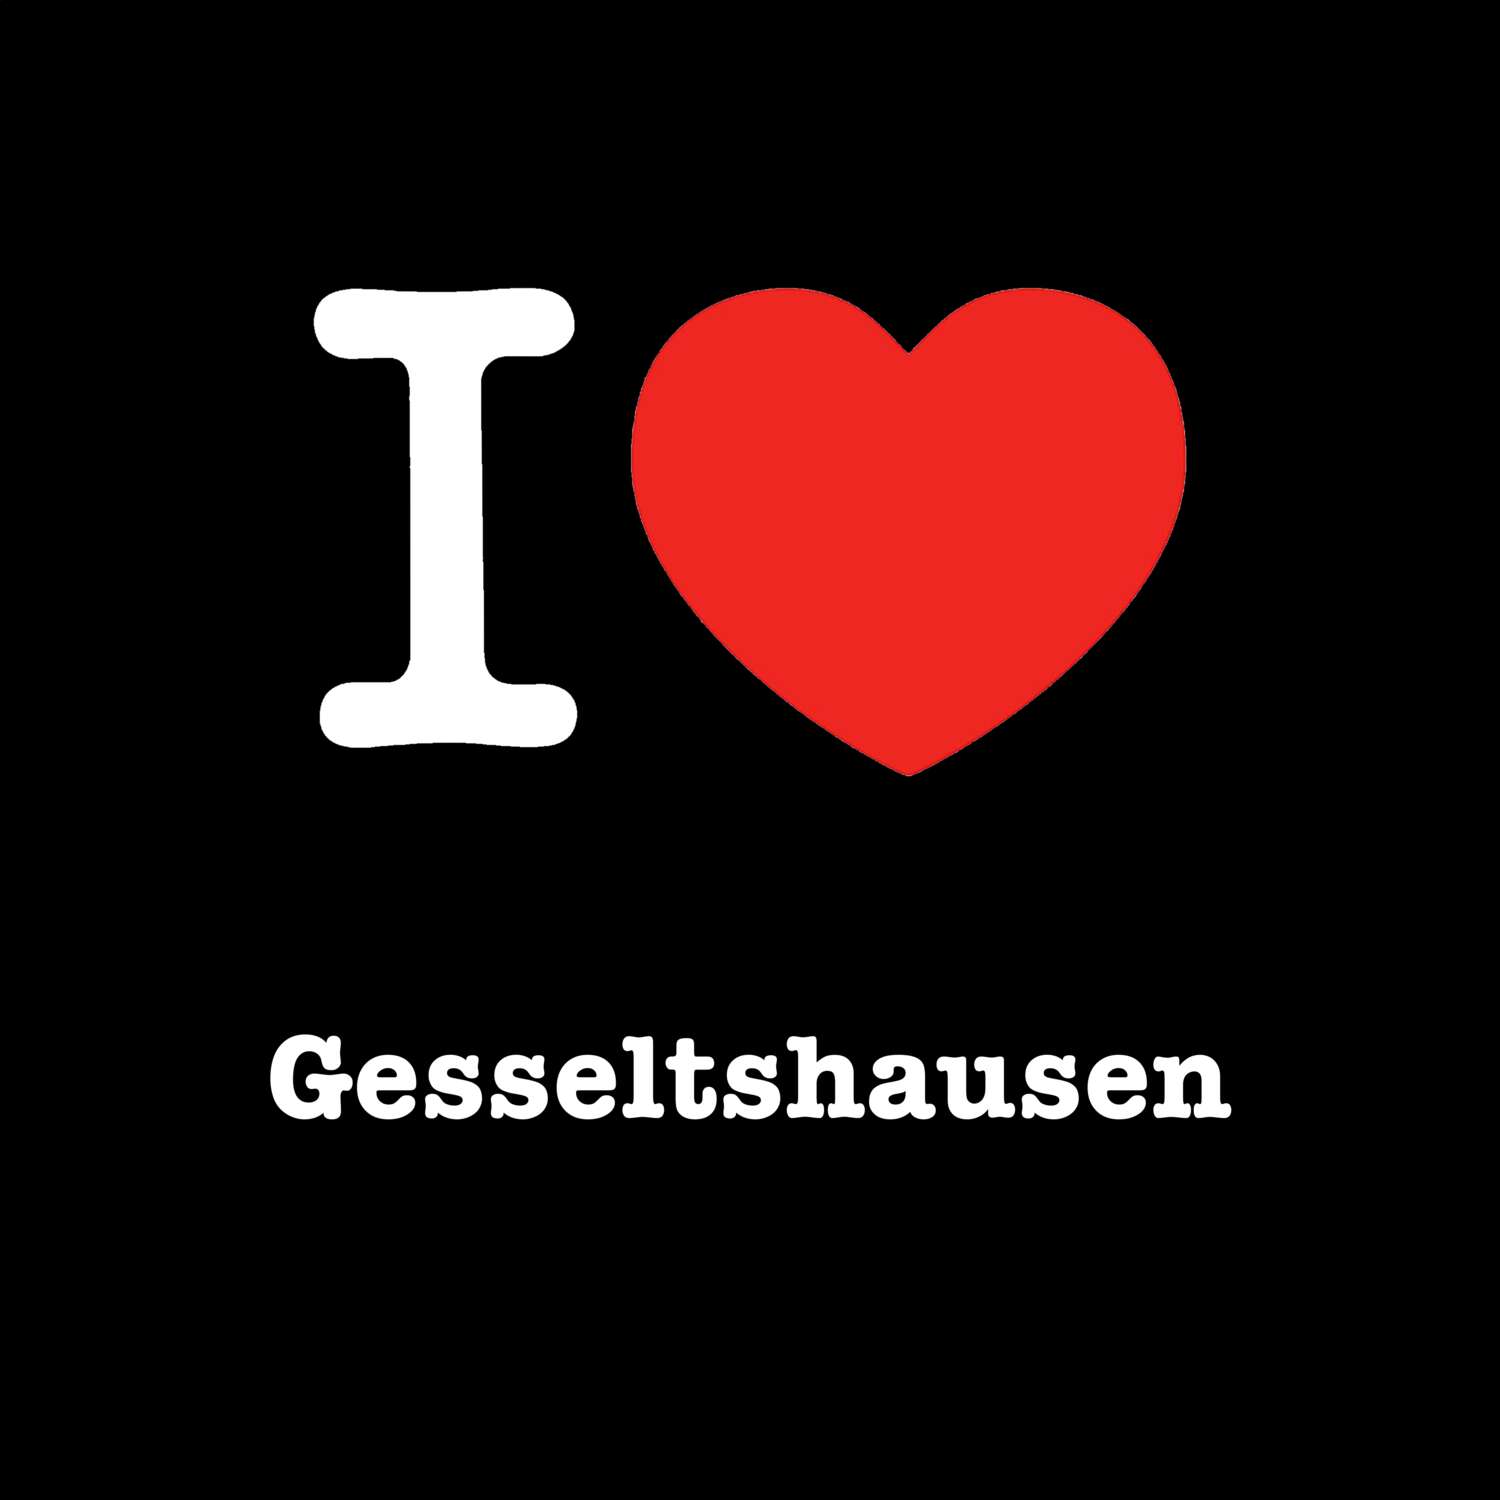 Gesseltshausen T-Shirt »I love«